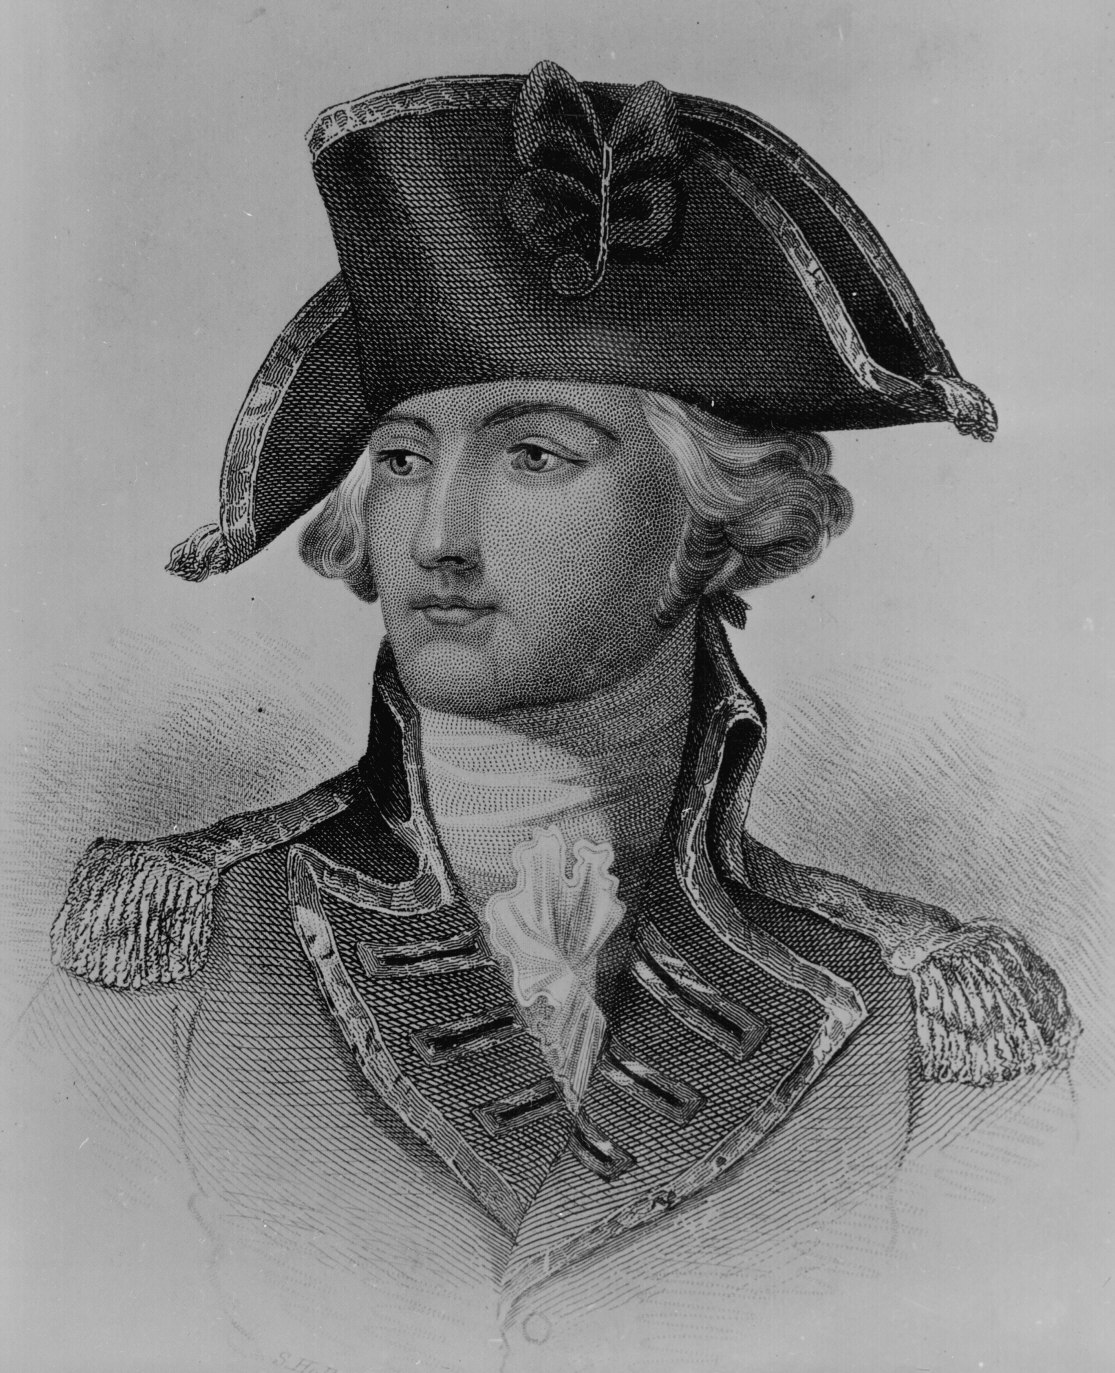 General John Burgoyne